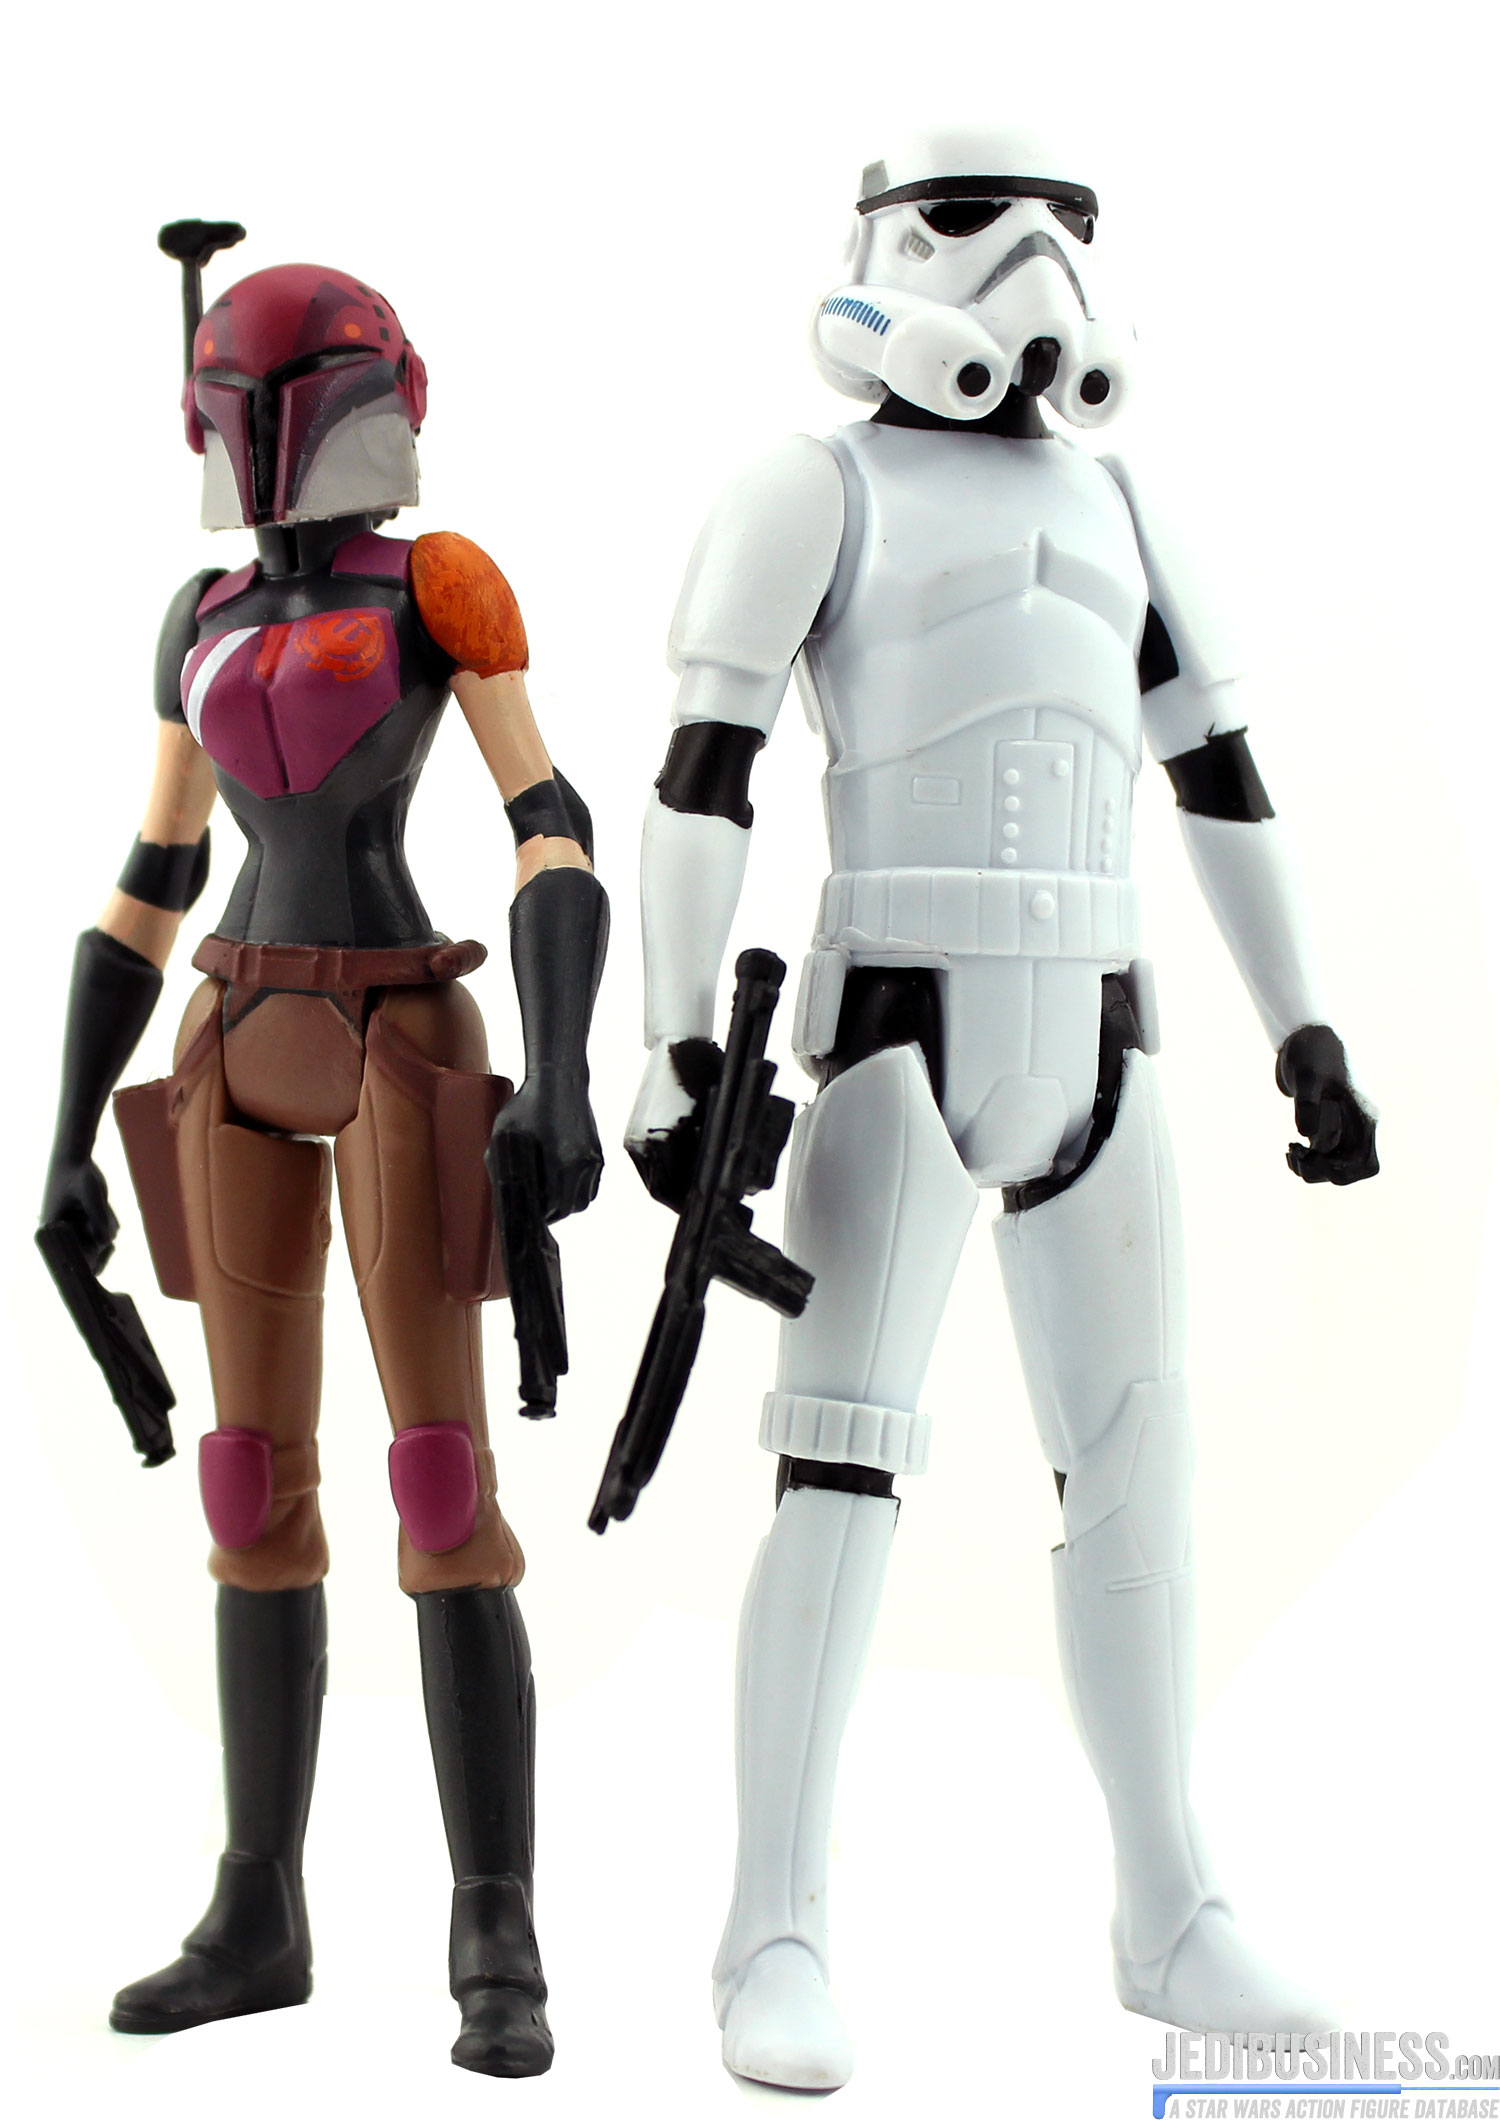 Stormtrooper Star Wars Rebels